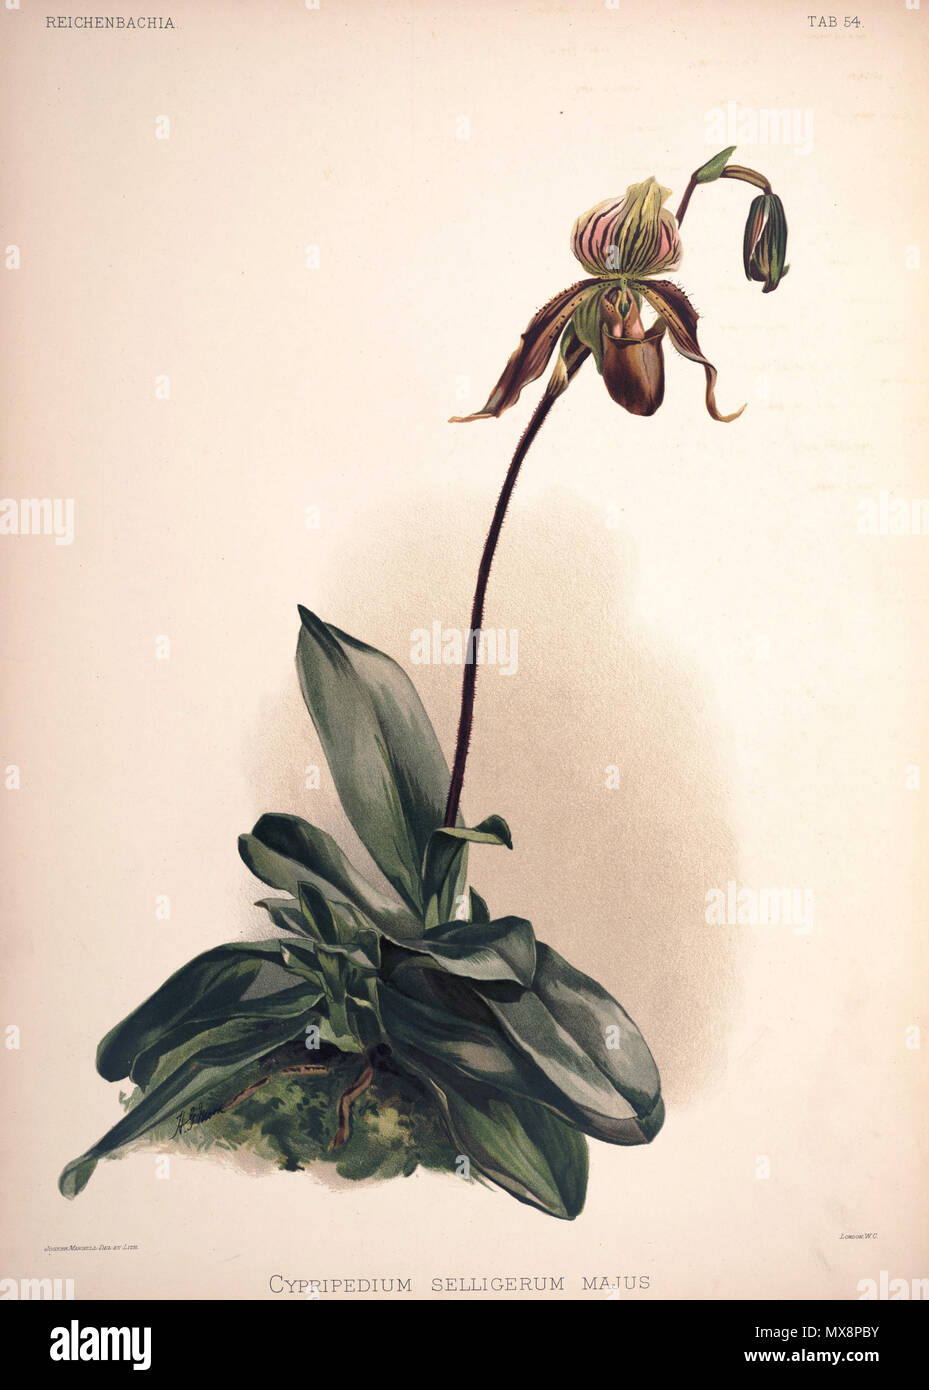 . Cypripedium × selligerum, cultivar: Paphiopedilum barbatum × Paphiopedilum philippinense . between 1888 and 1894. H. Sotheran & Co., London (editor) 220 Frederick Sander - Reichenbachia II plate 54 (1890) - Cypripedium selligerum majus Stock Photo